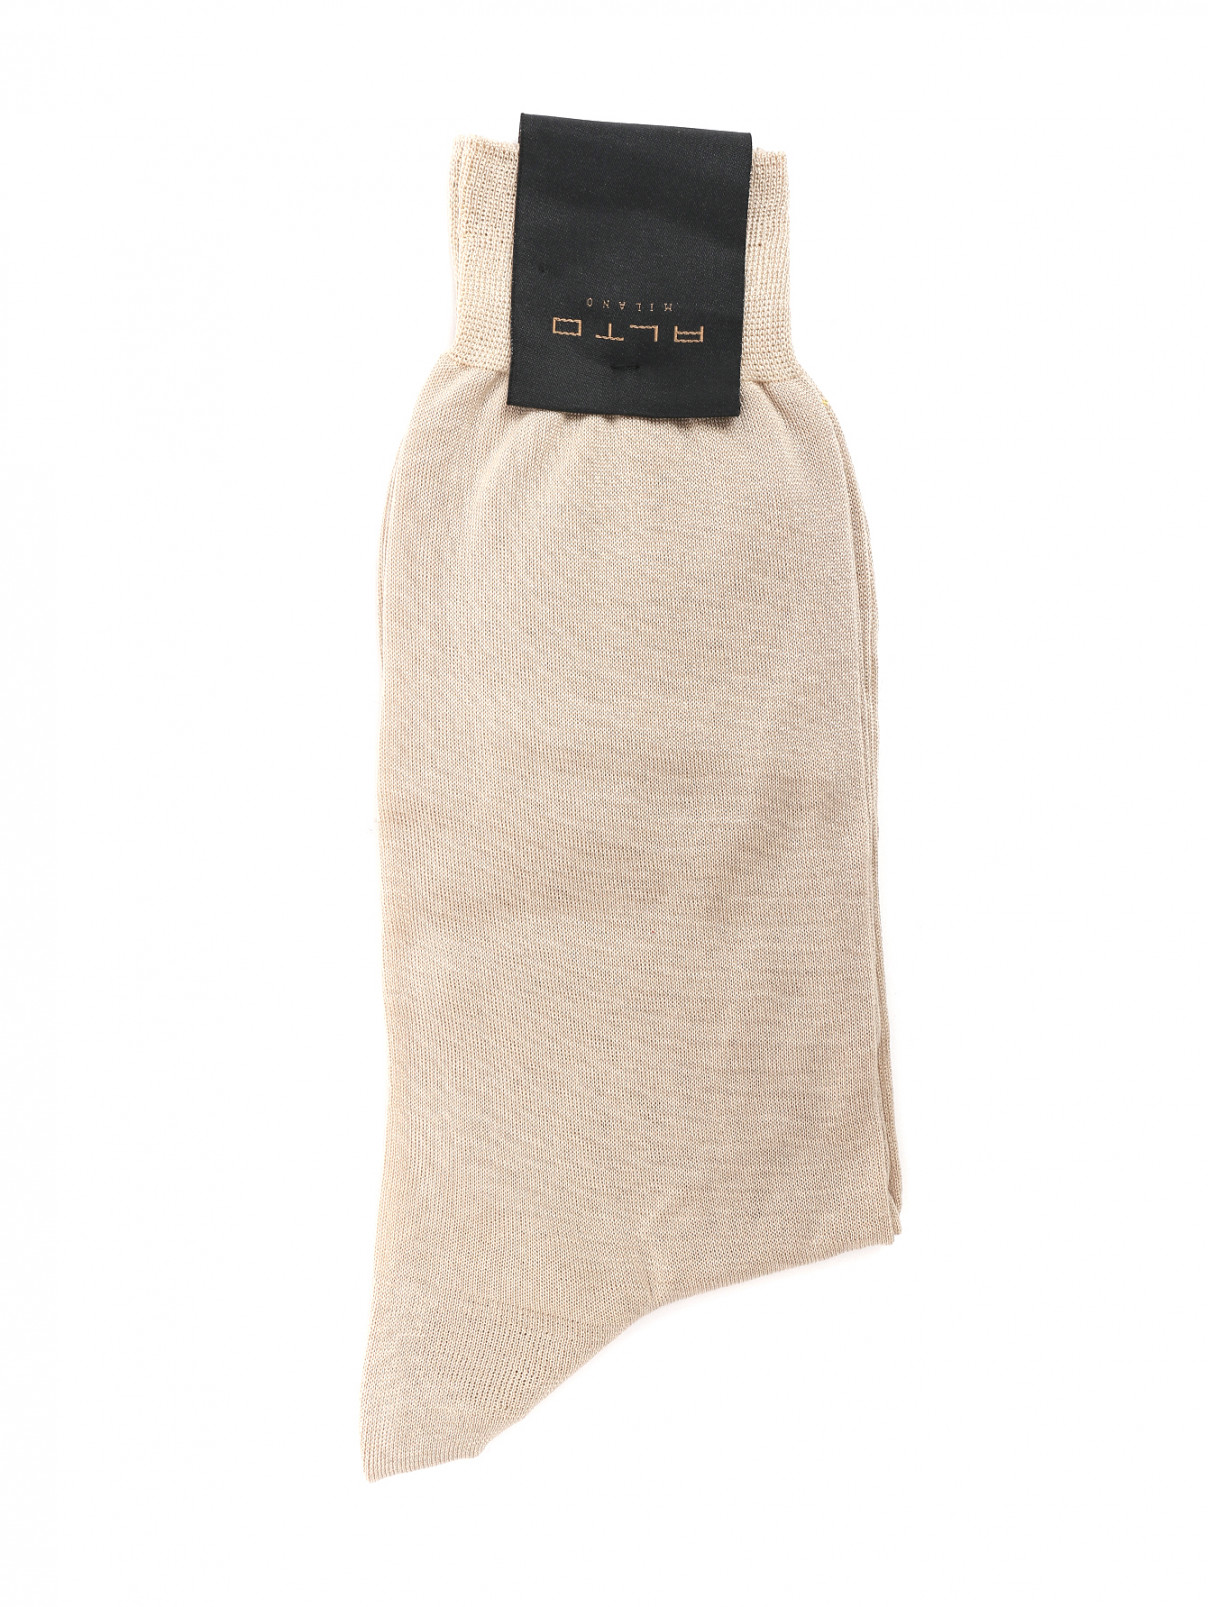 Носки из хлопка Peekaboo  –  Общий вид  – Цвет:  Бежевый